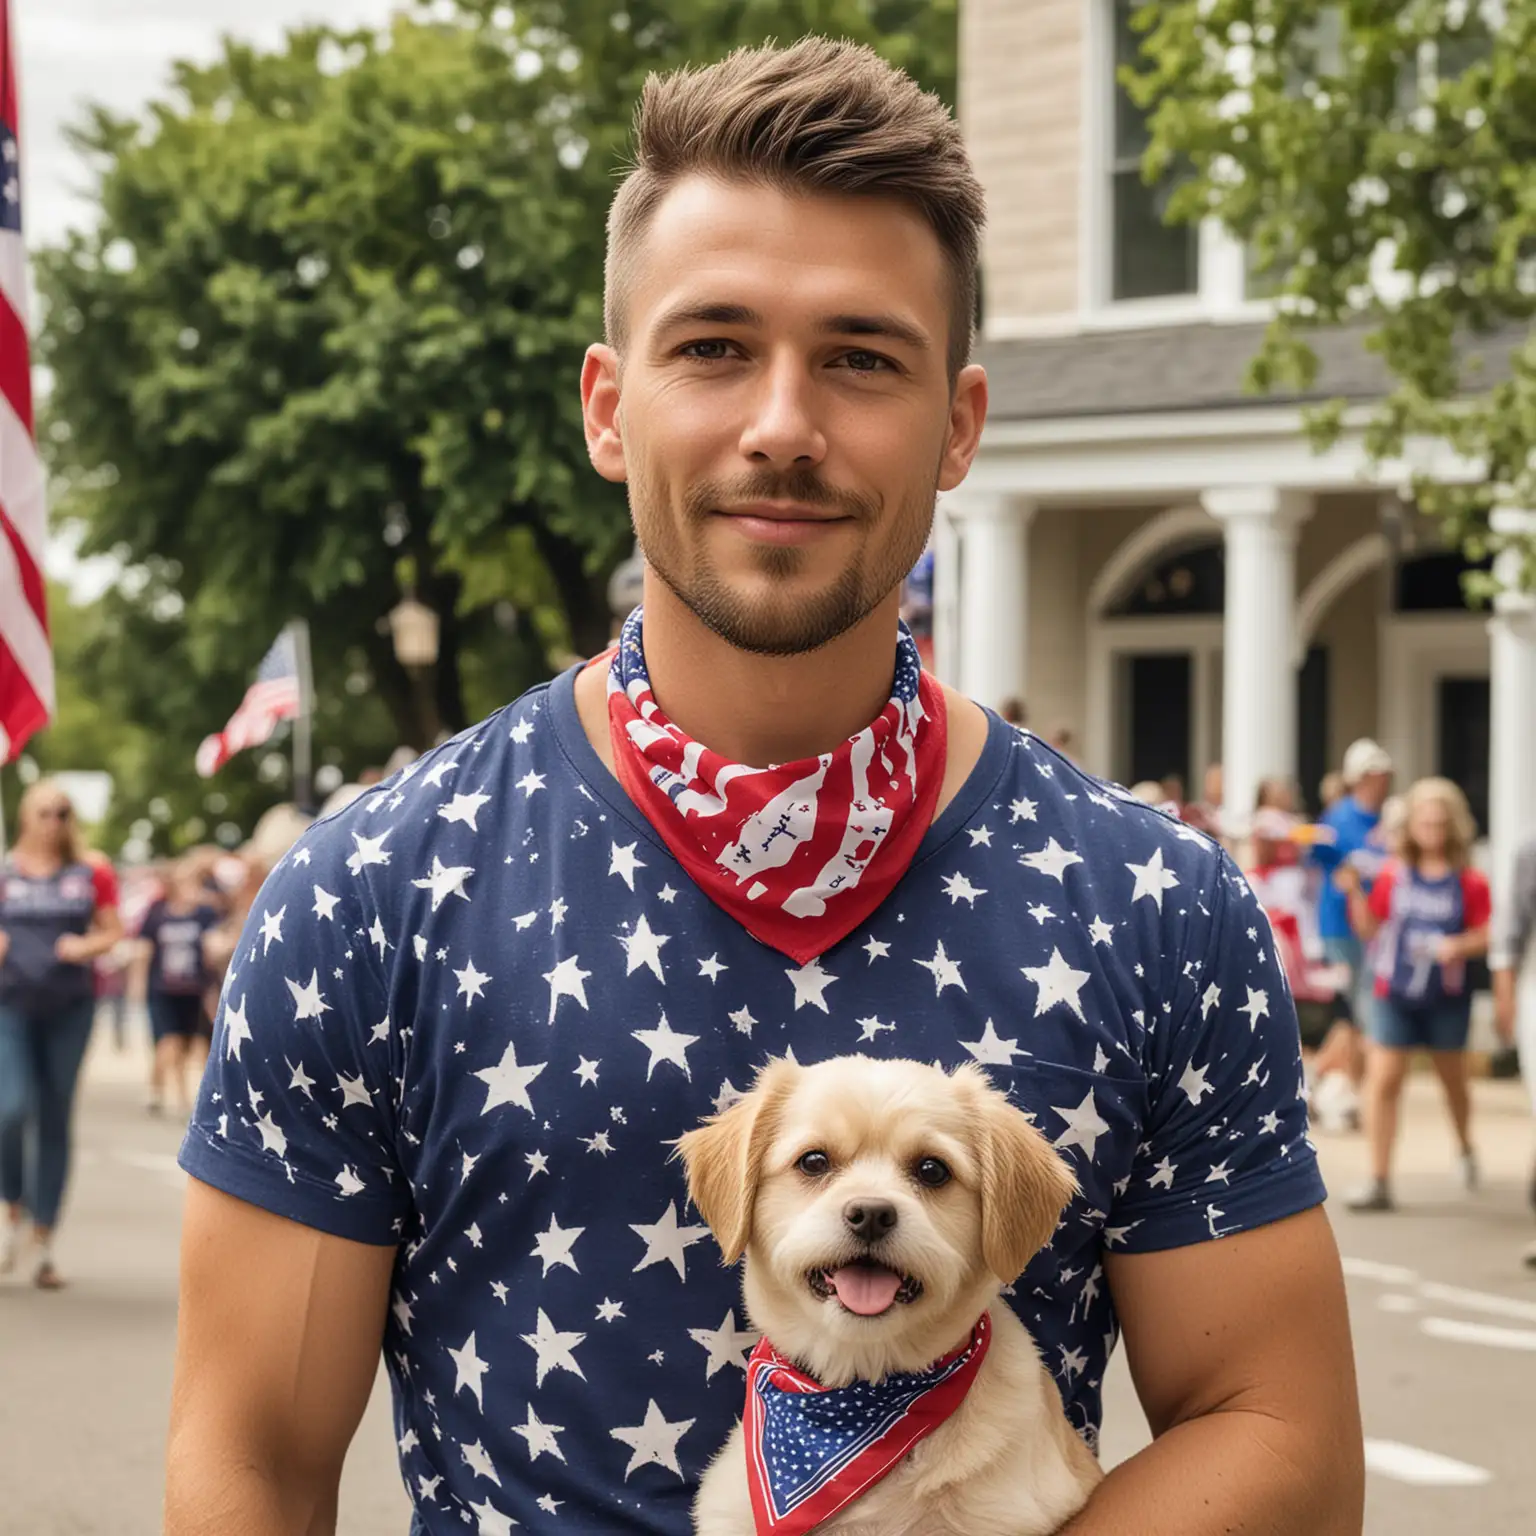 Patriotic Man with FlagAdorned Dog in Parade Scene